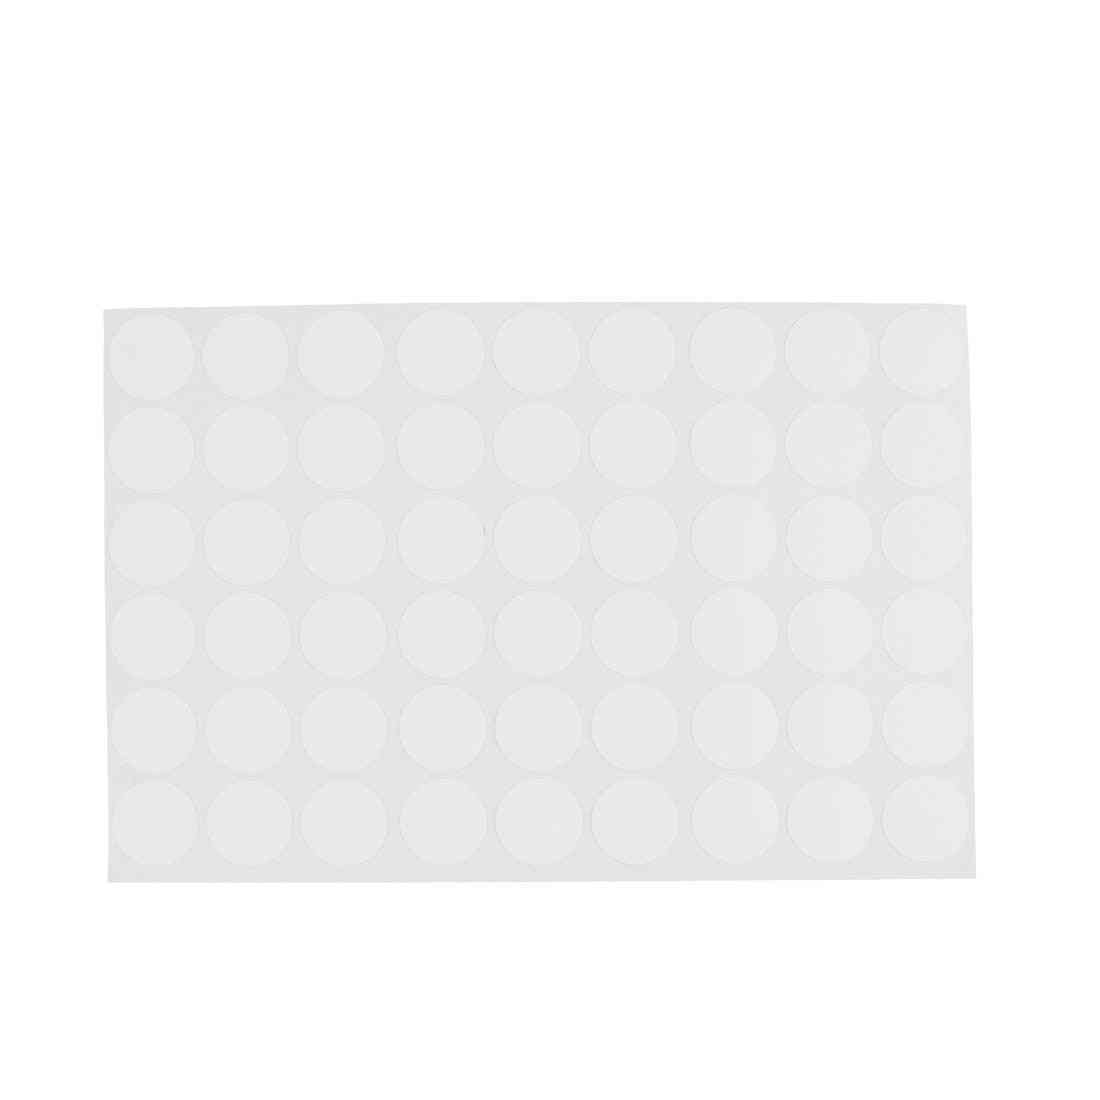 Zelfklevende schroefdeksels / sticker-54 in 1 voor kleerkast of kast (wit) -